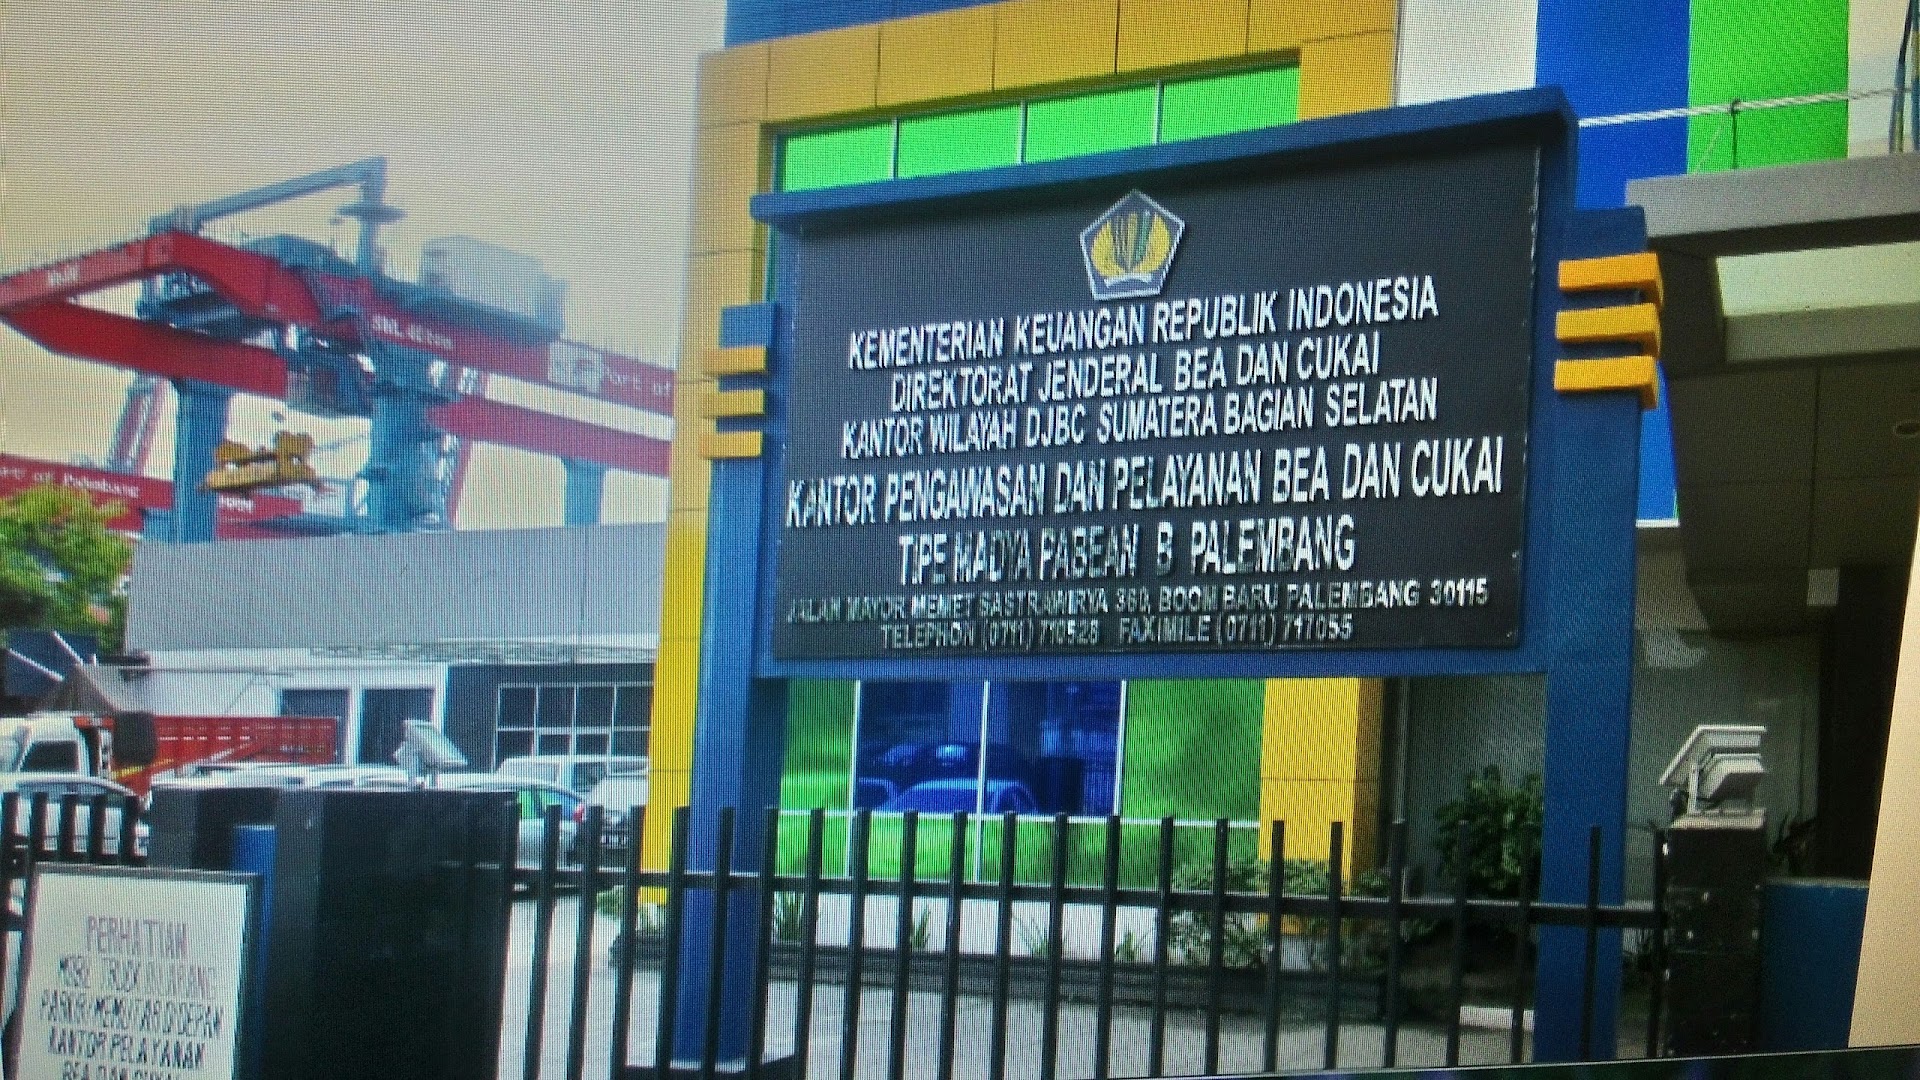 Kppbc Tipe Madya Pabean B Palembang ( Kppbc Tmp B Palembang) Photo